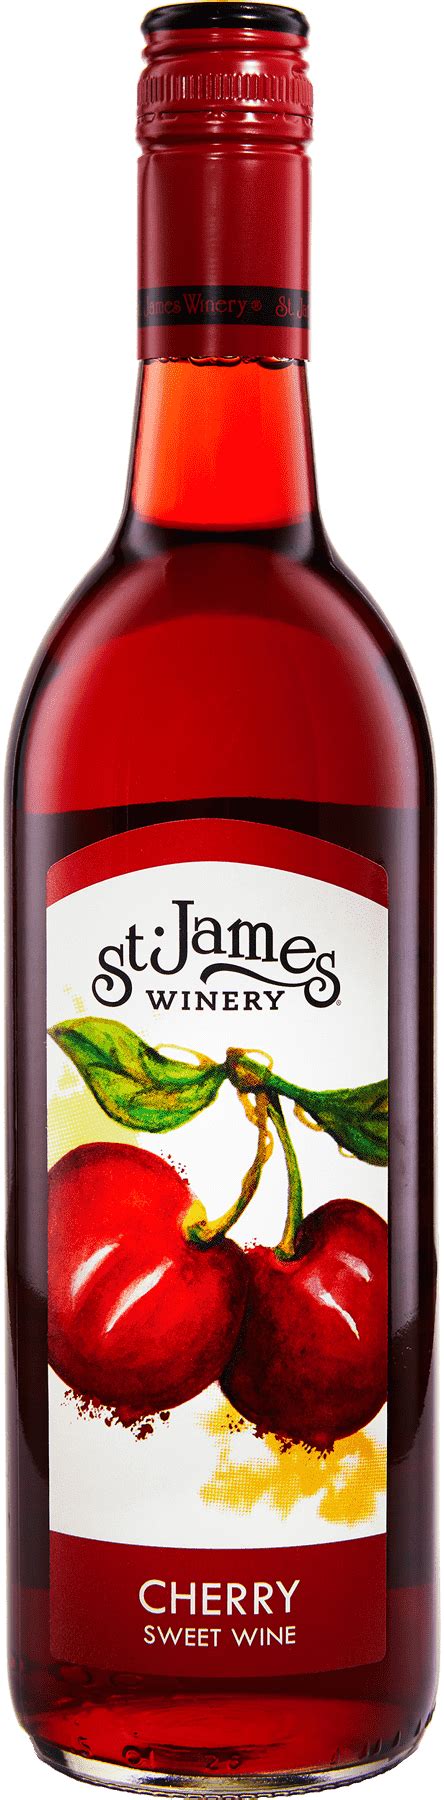 Cherry Wine St James Winery